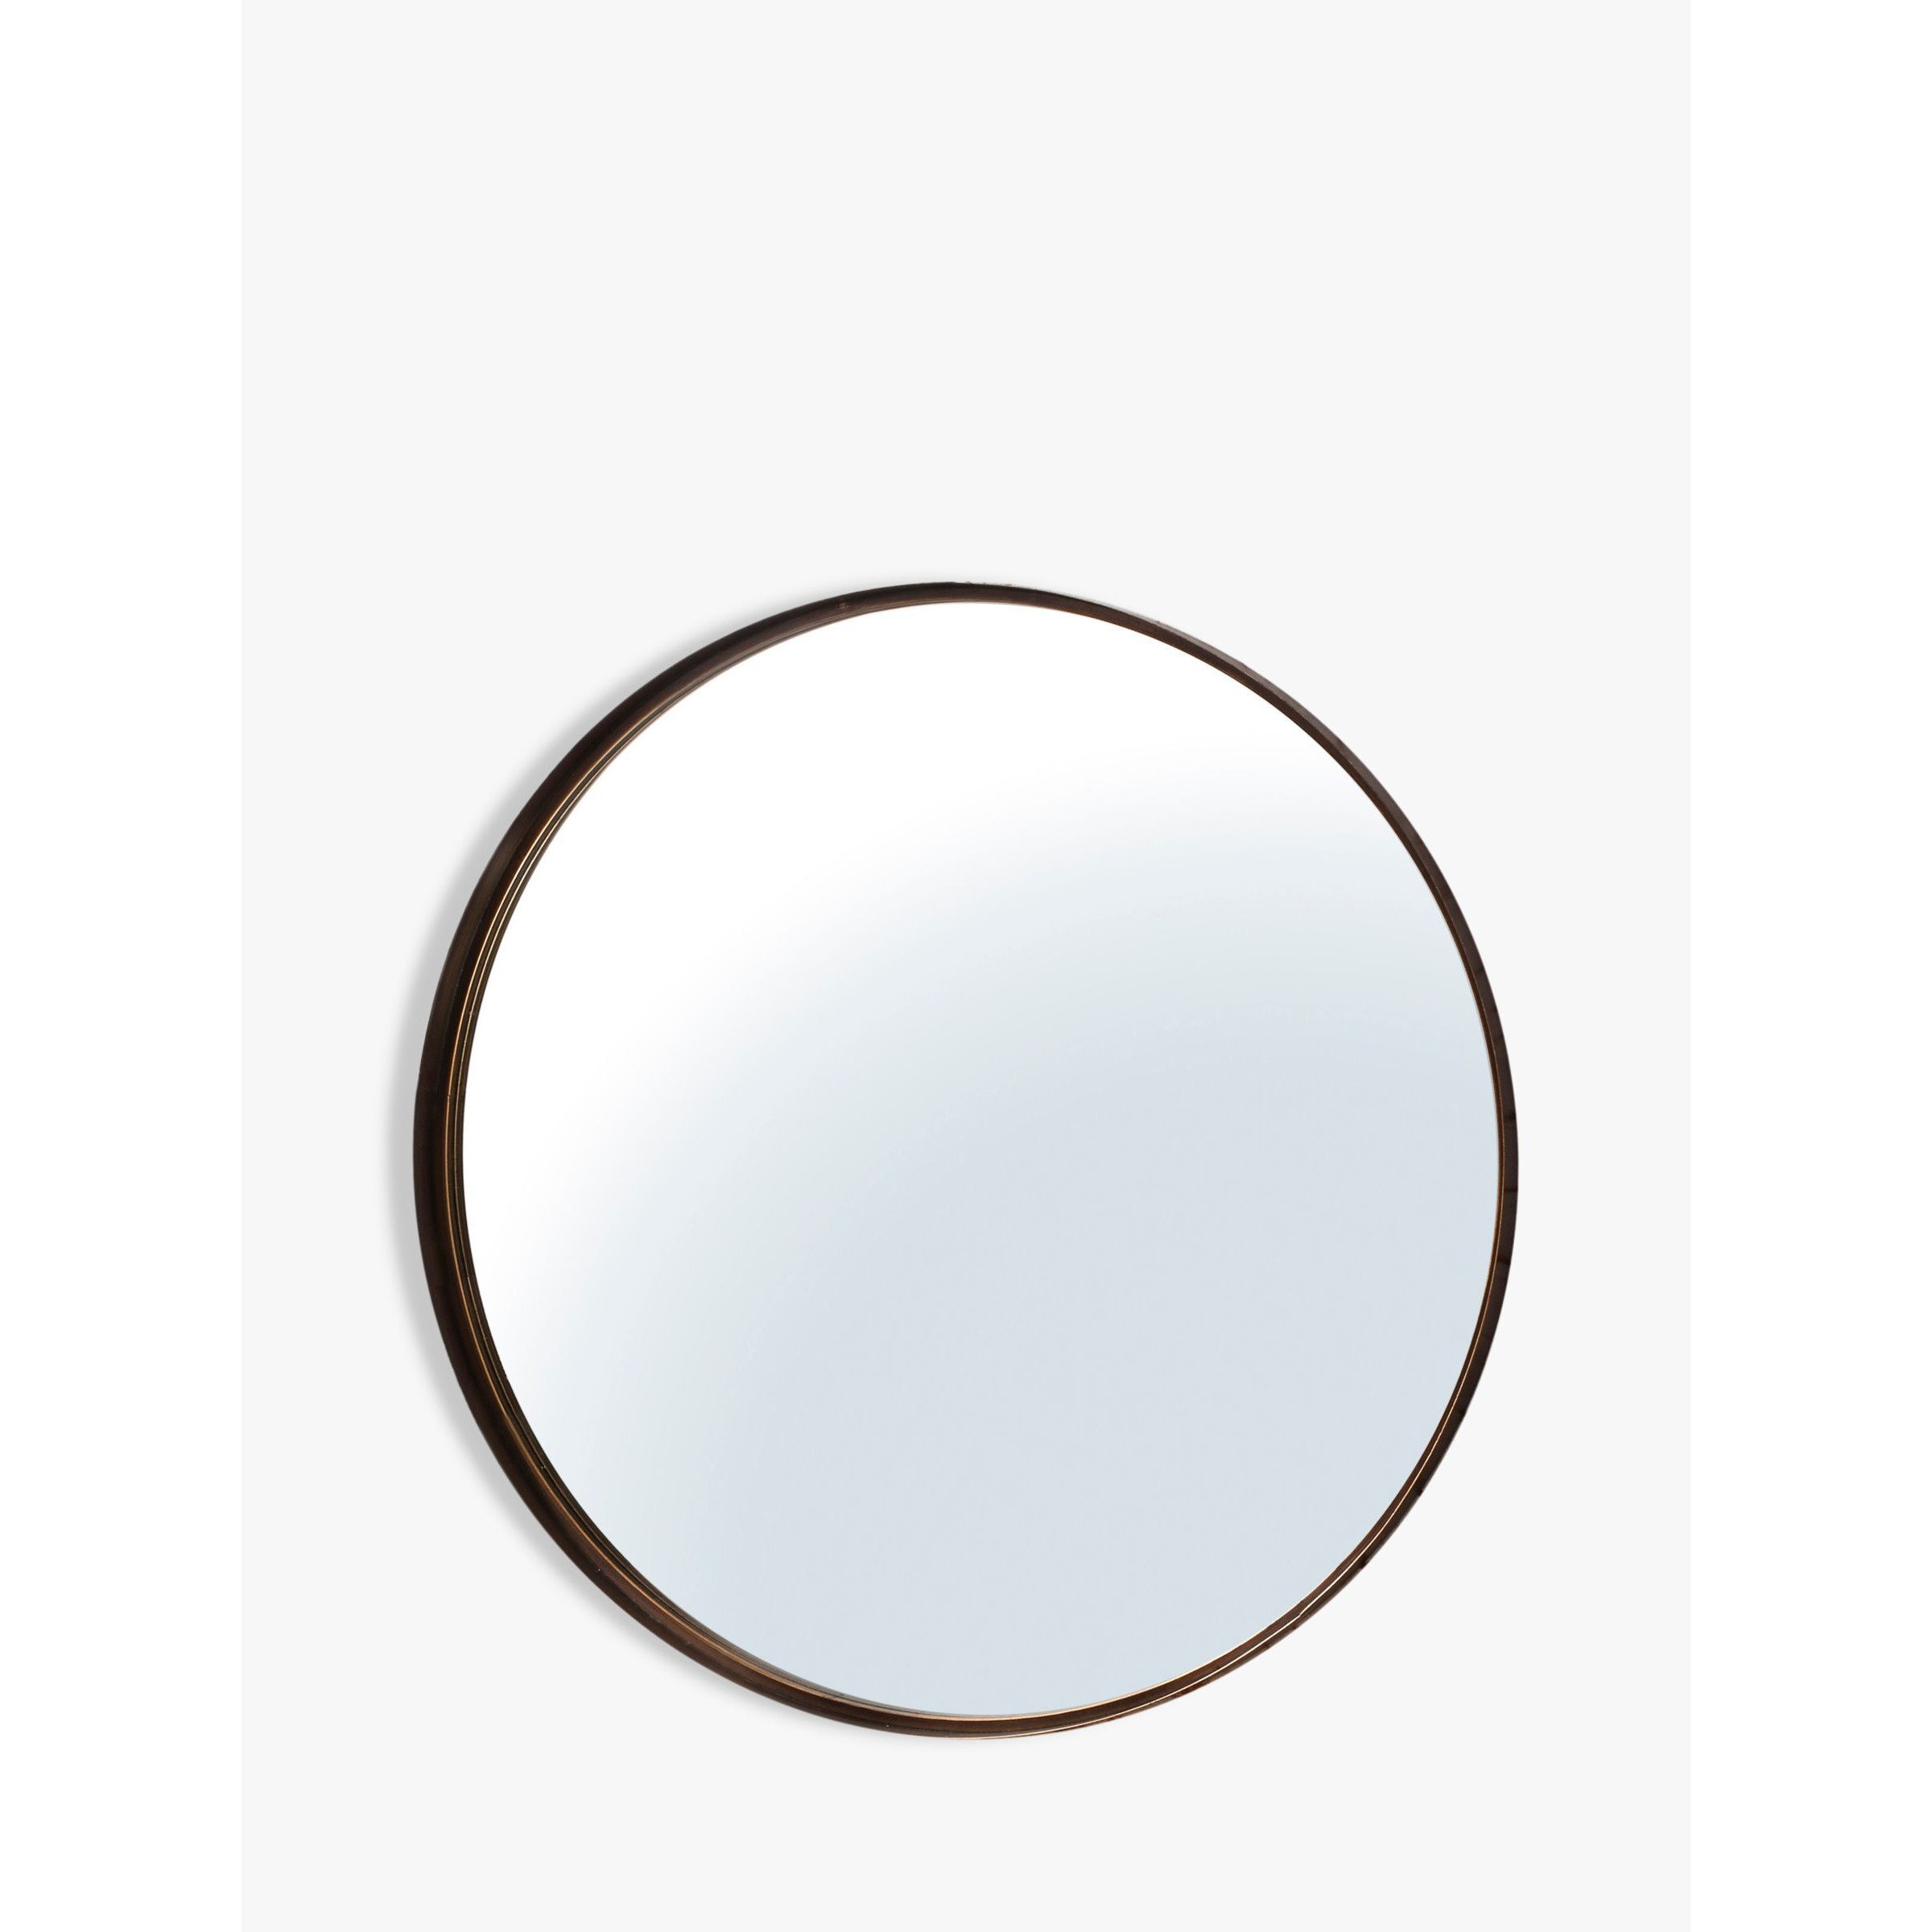 Francis Round Mirror, 84cm - image 1